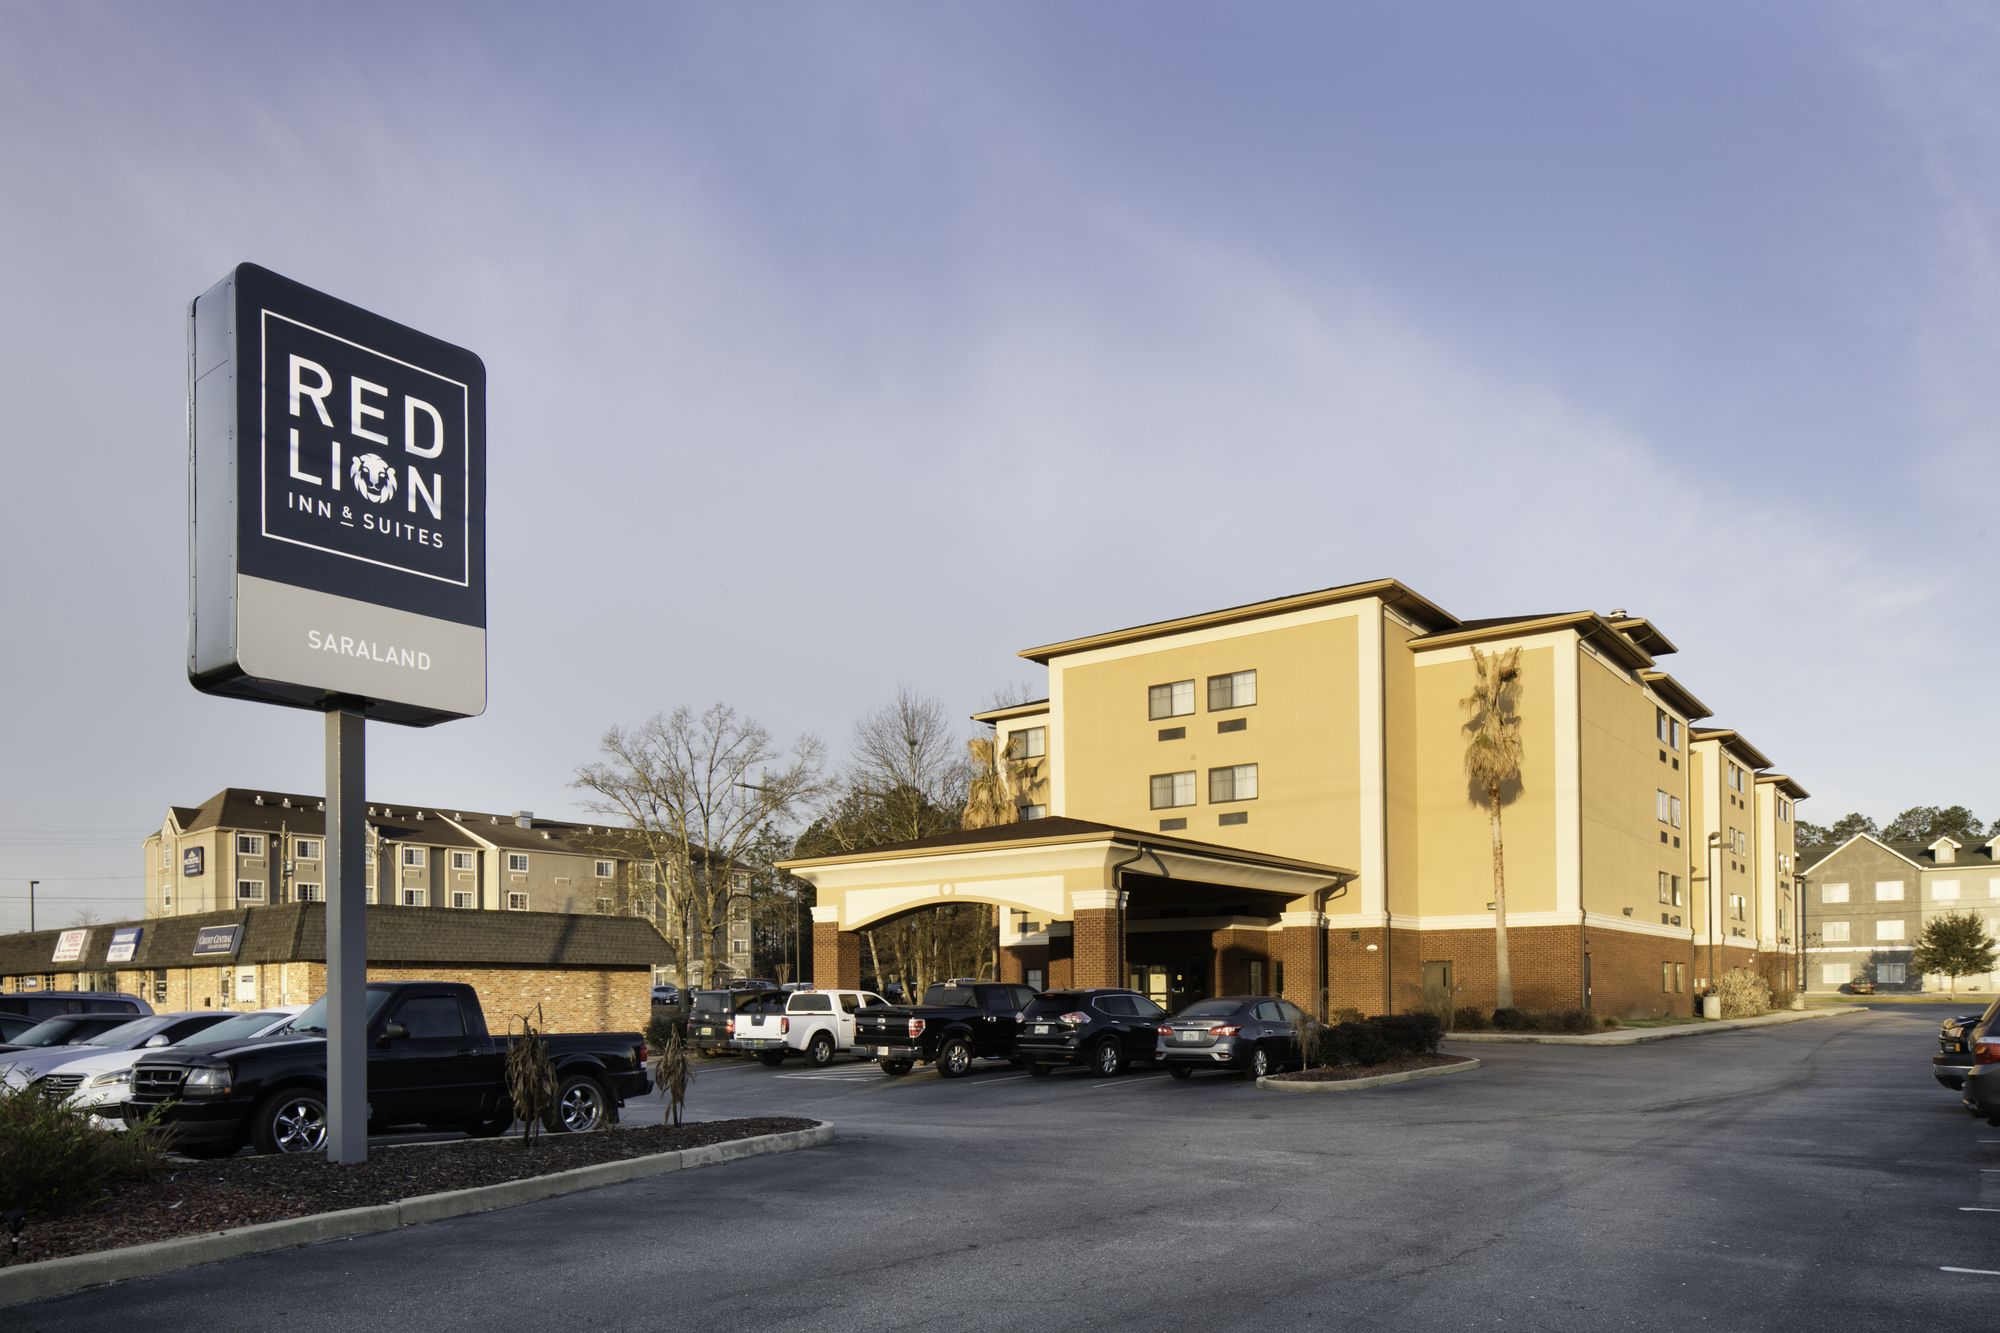 Red Lion Inn & Suites Saraland